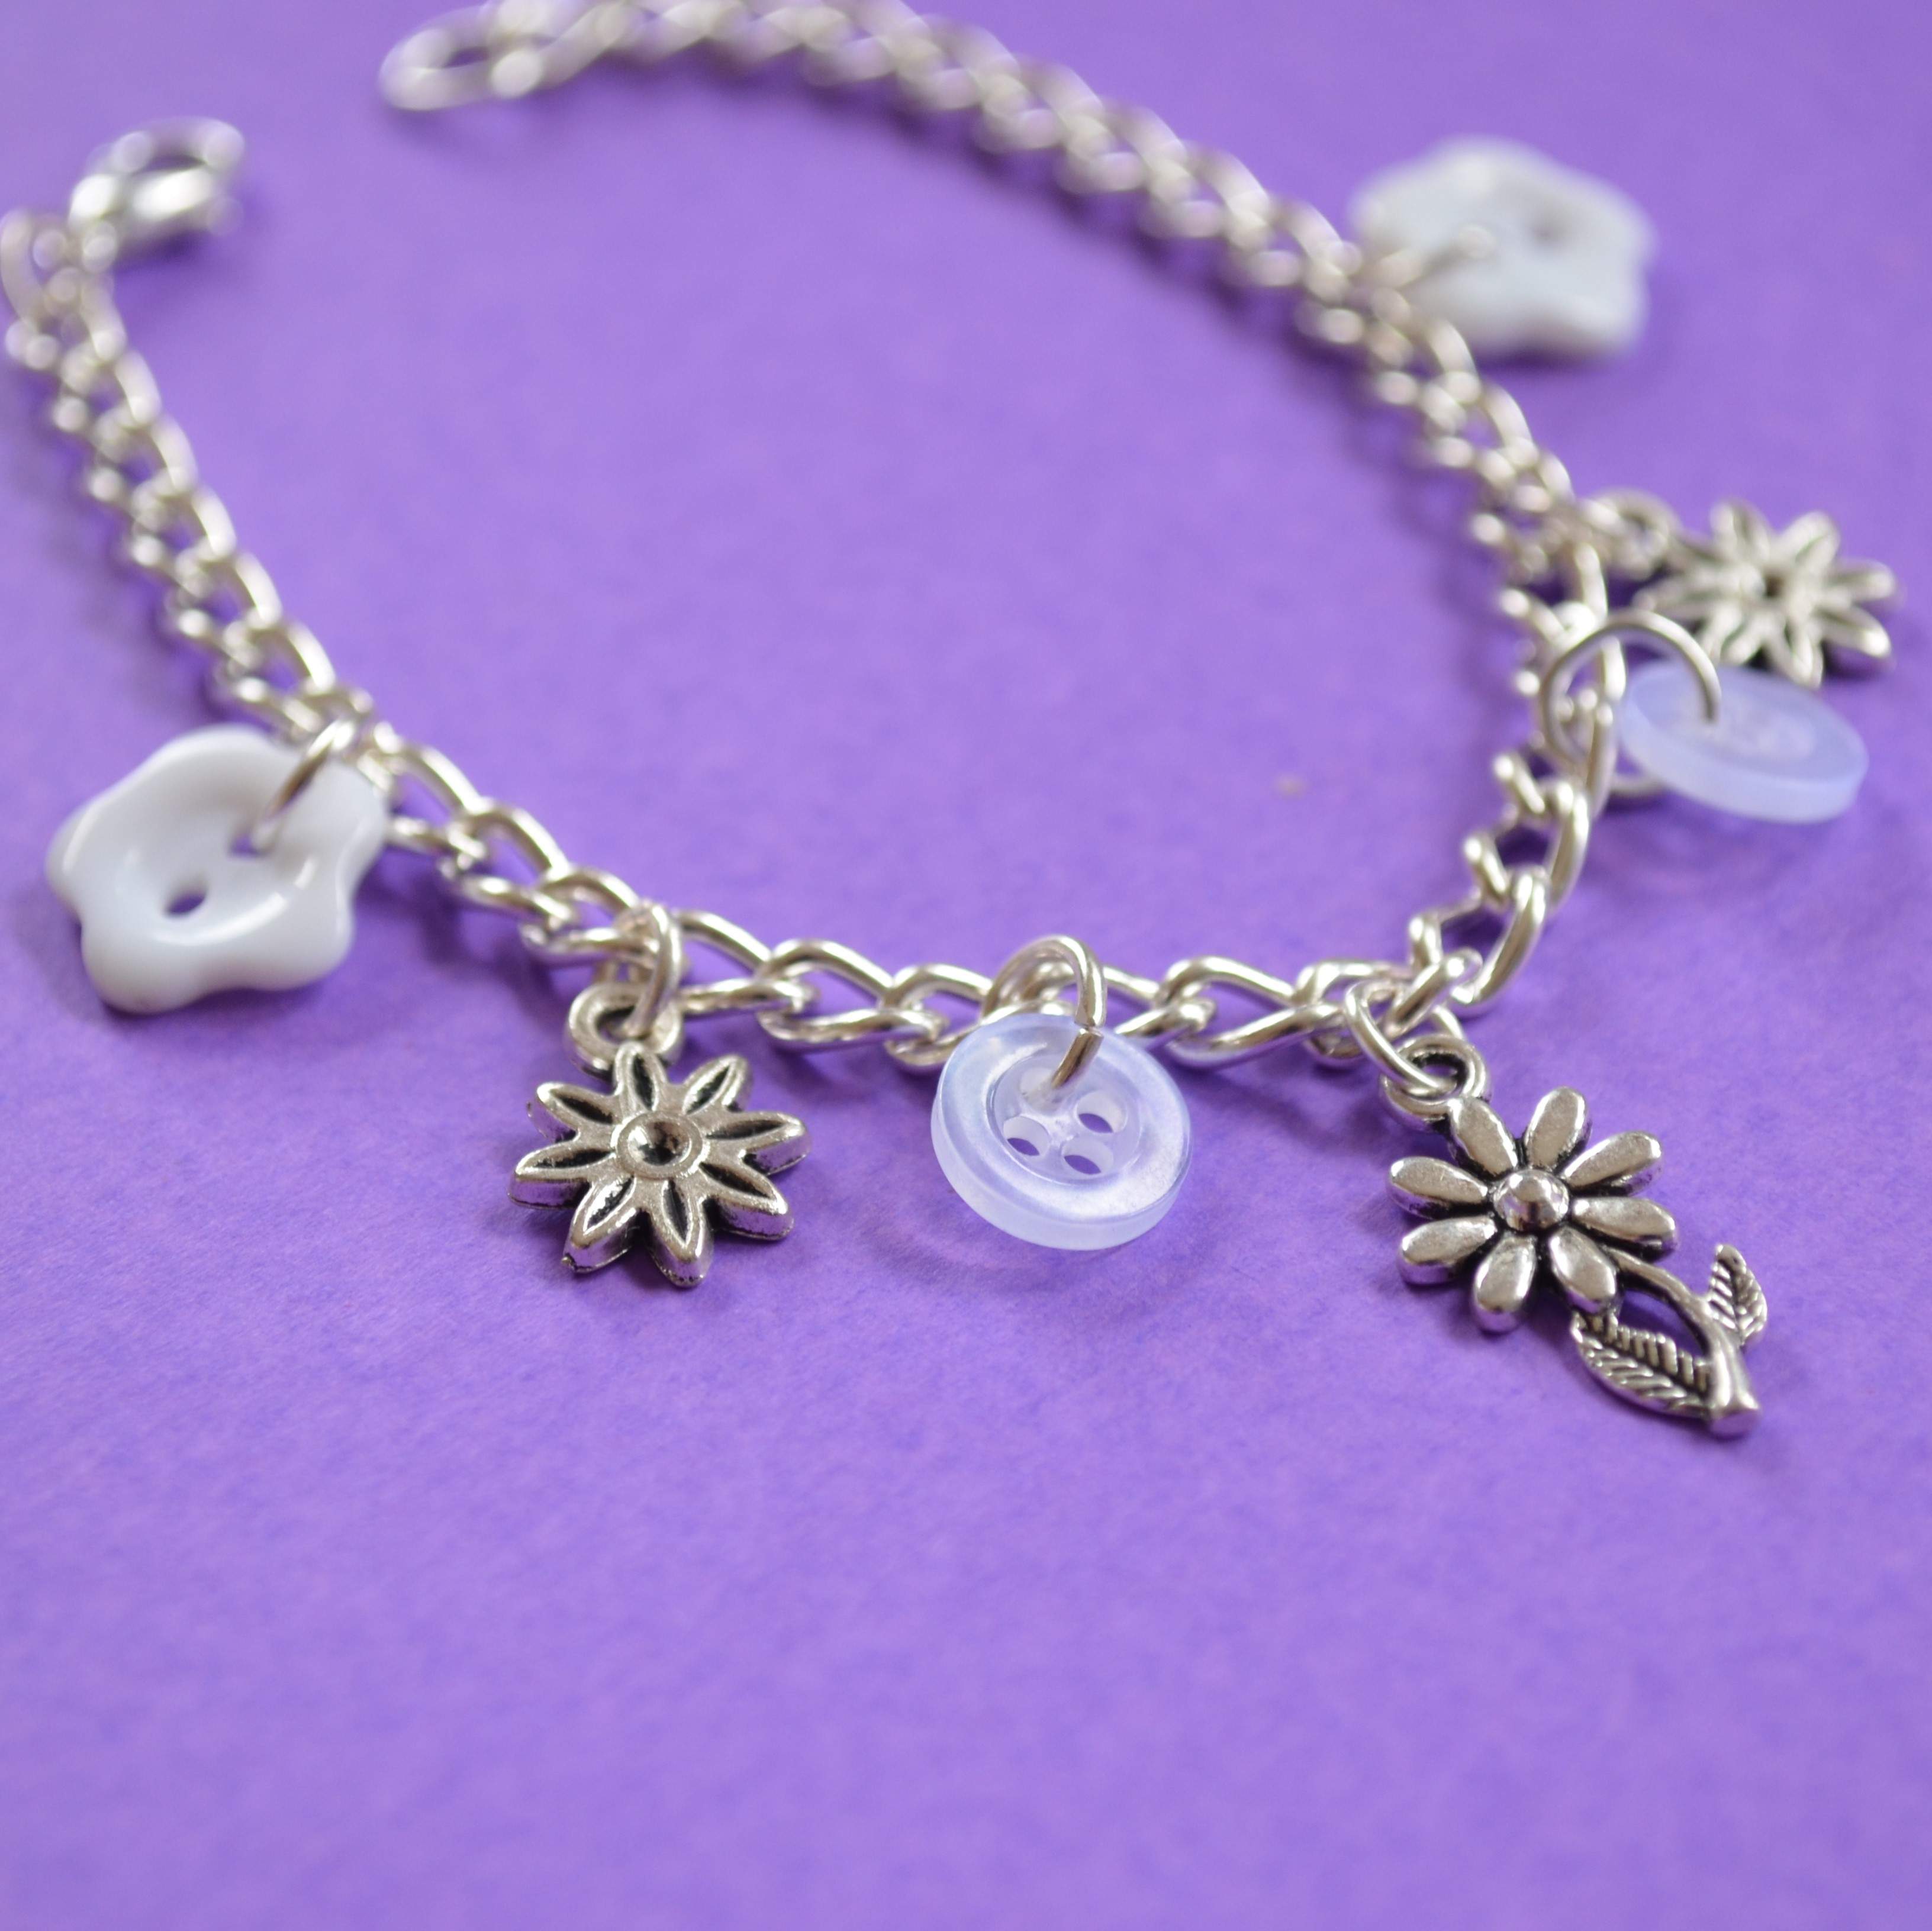 Flower Child’s Button Charm Bracelet